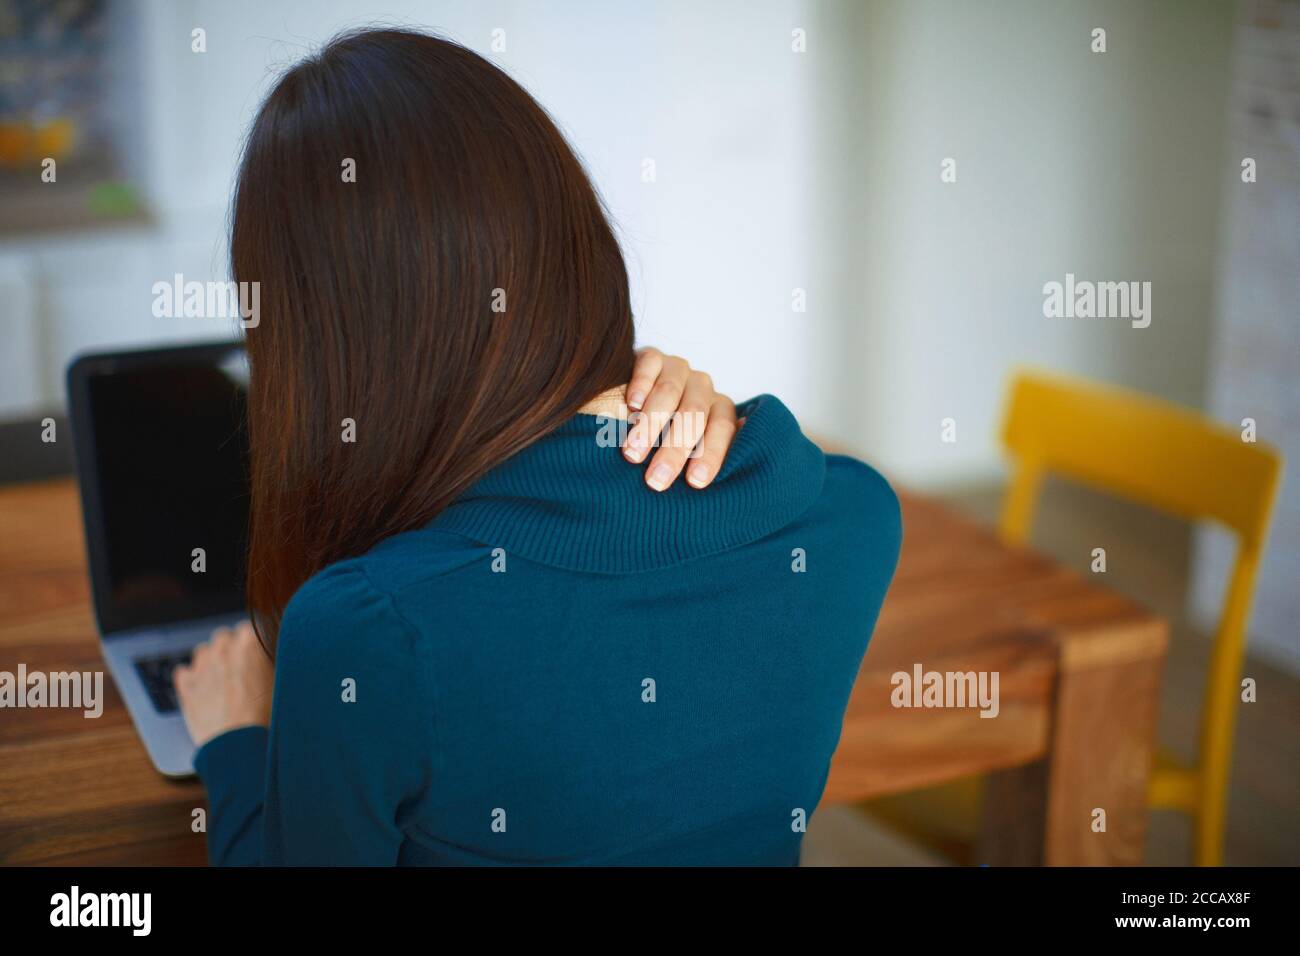 Close up of a brunette woman massaging her neck or shoulder. Stock Photo